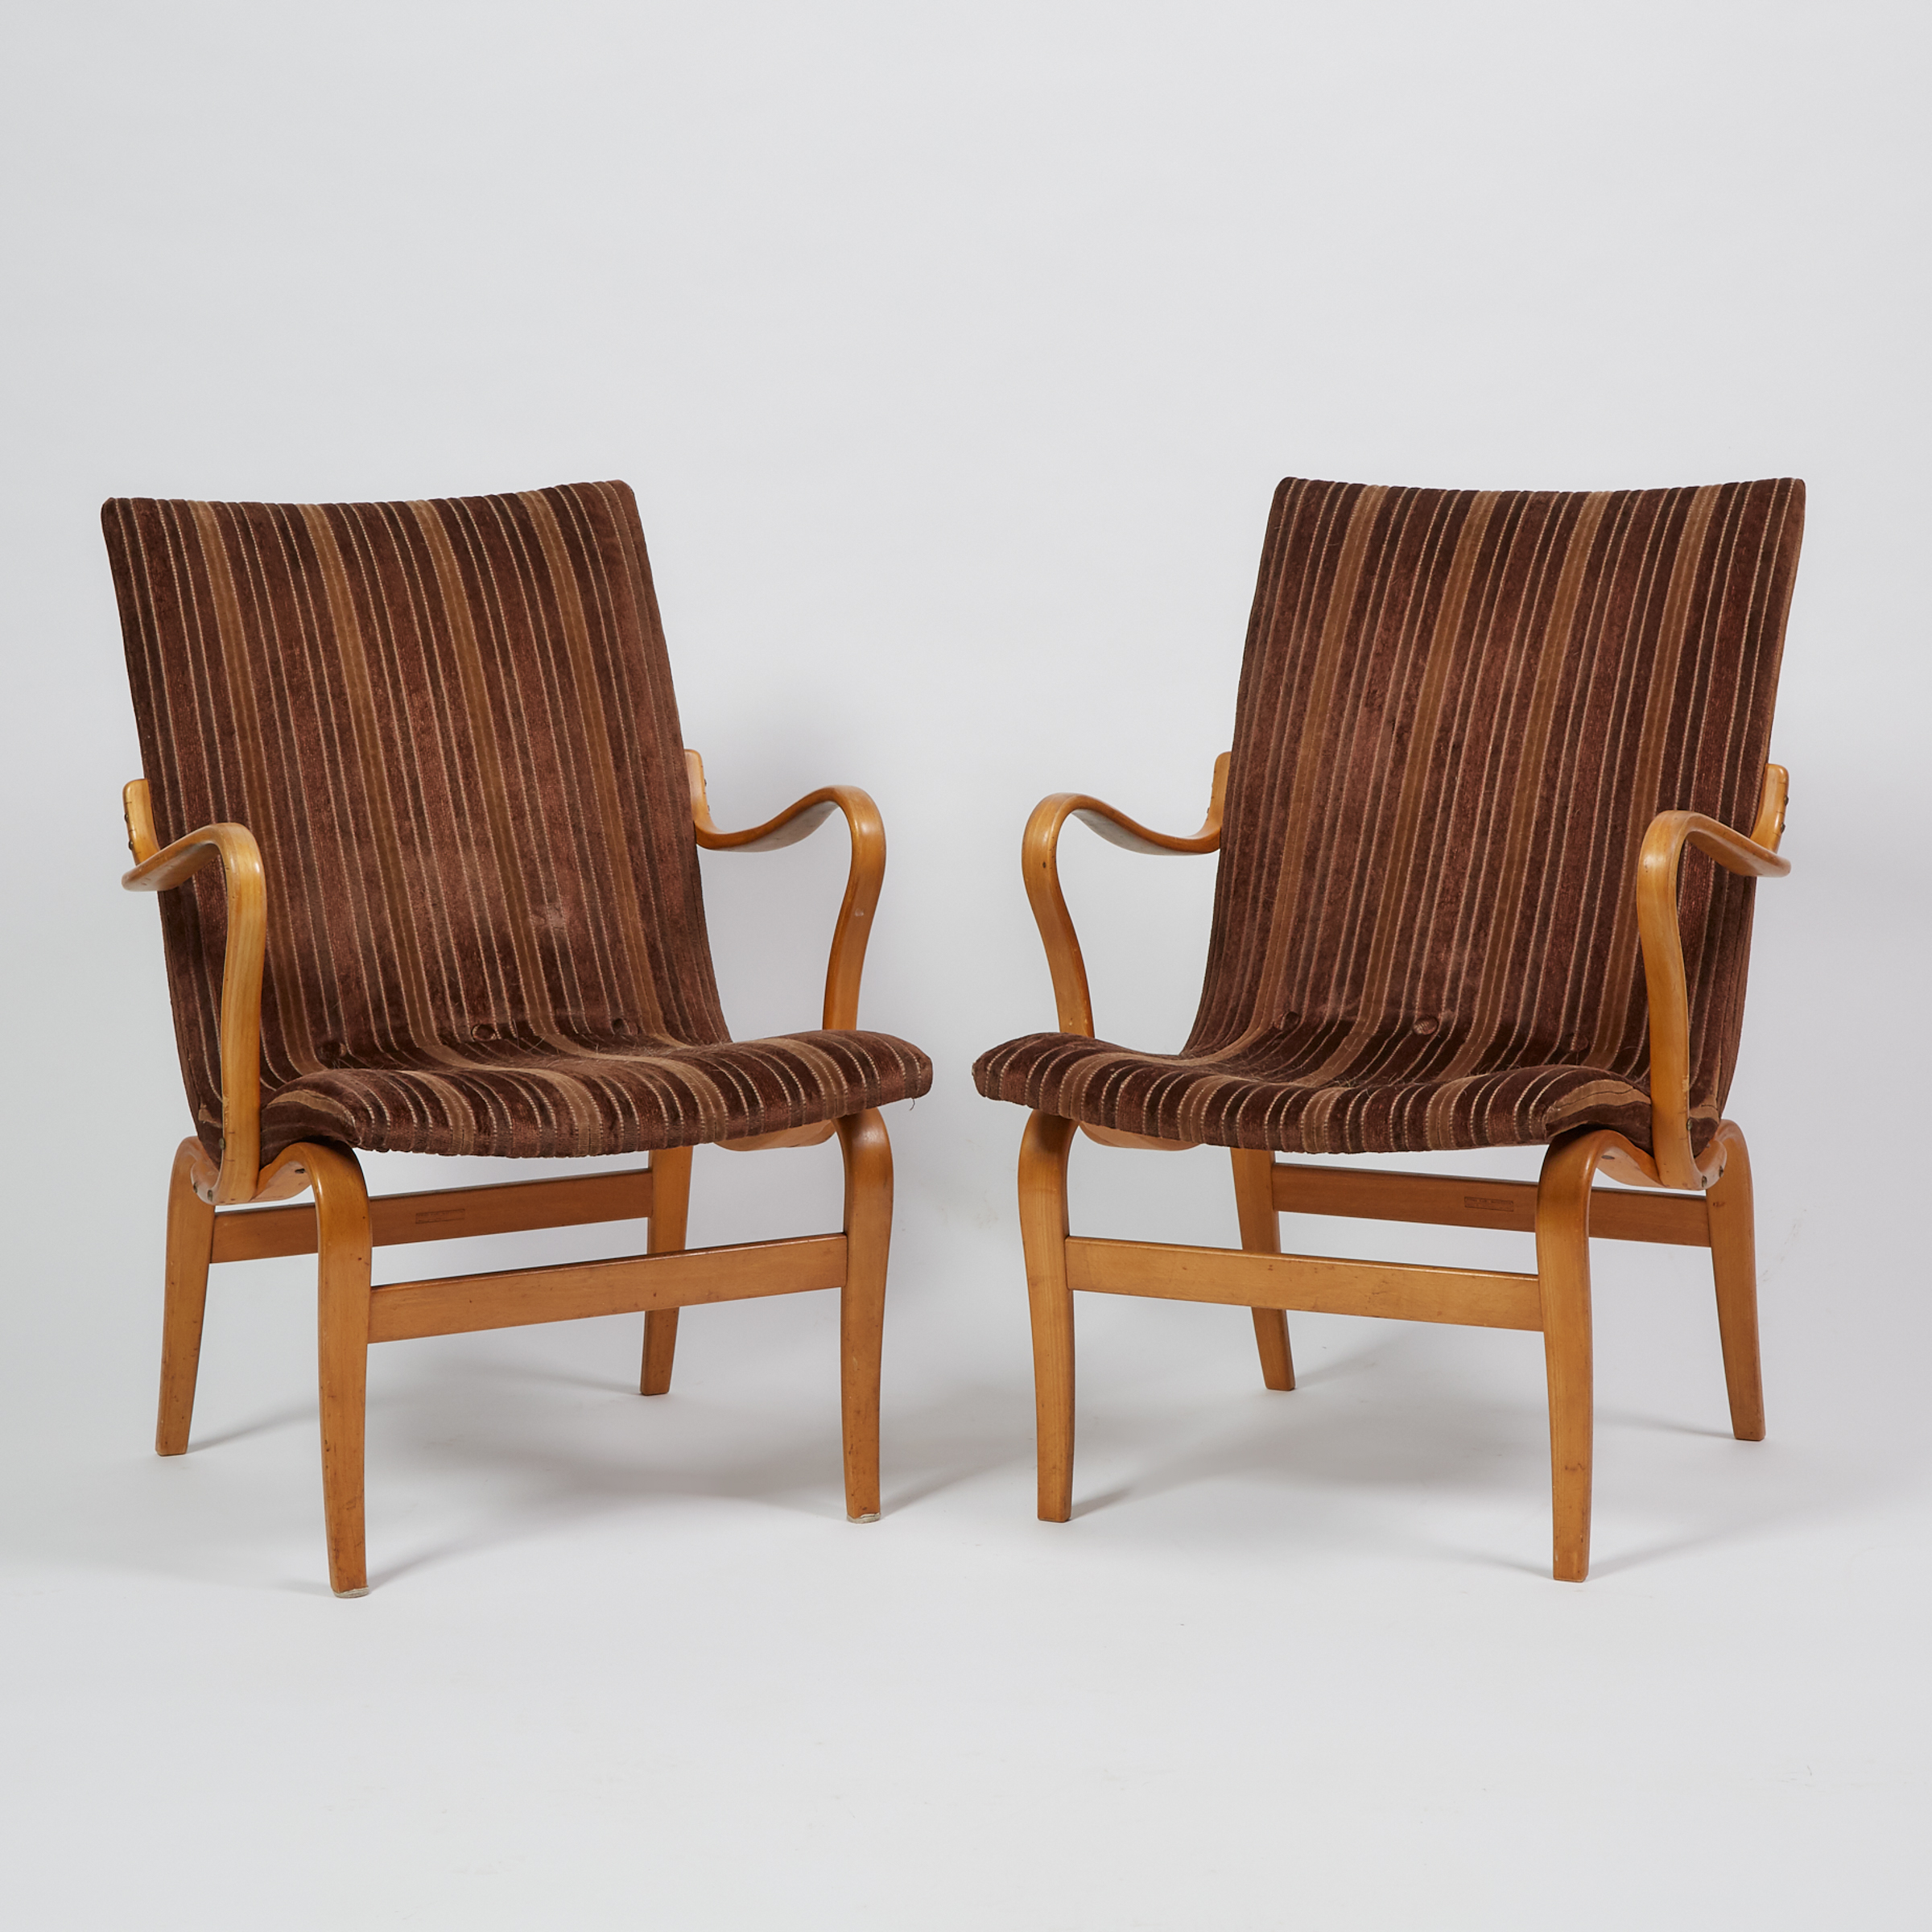 Pair of Bruno Mathsson ‘Eva’ Open Arm Chairs, mid 20th century